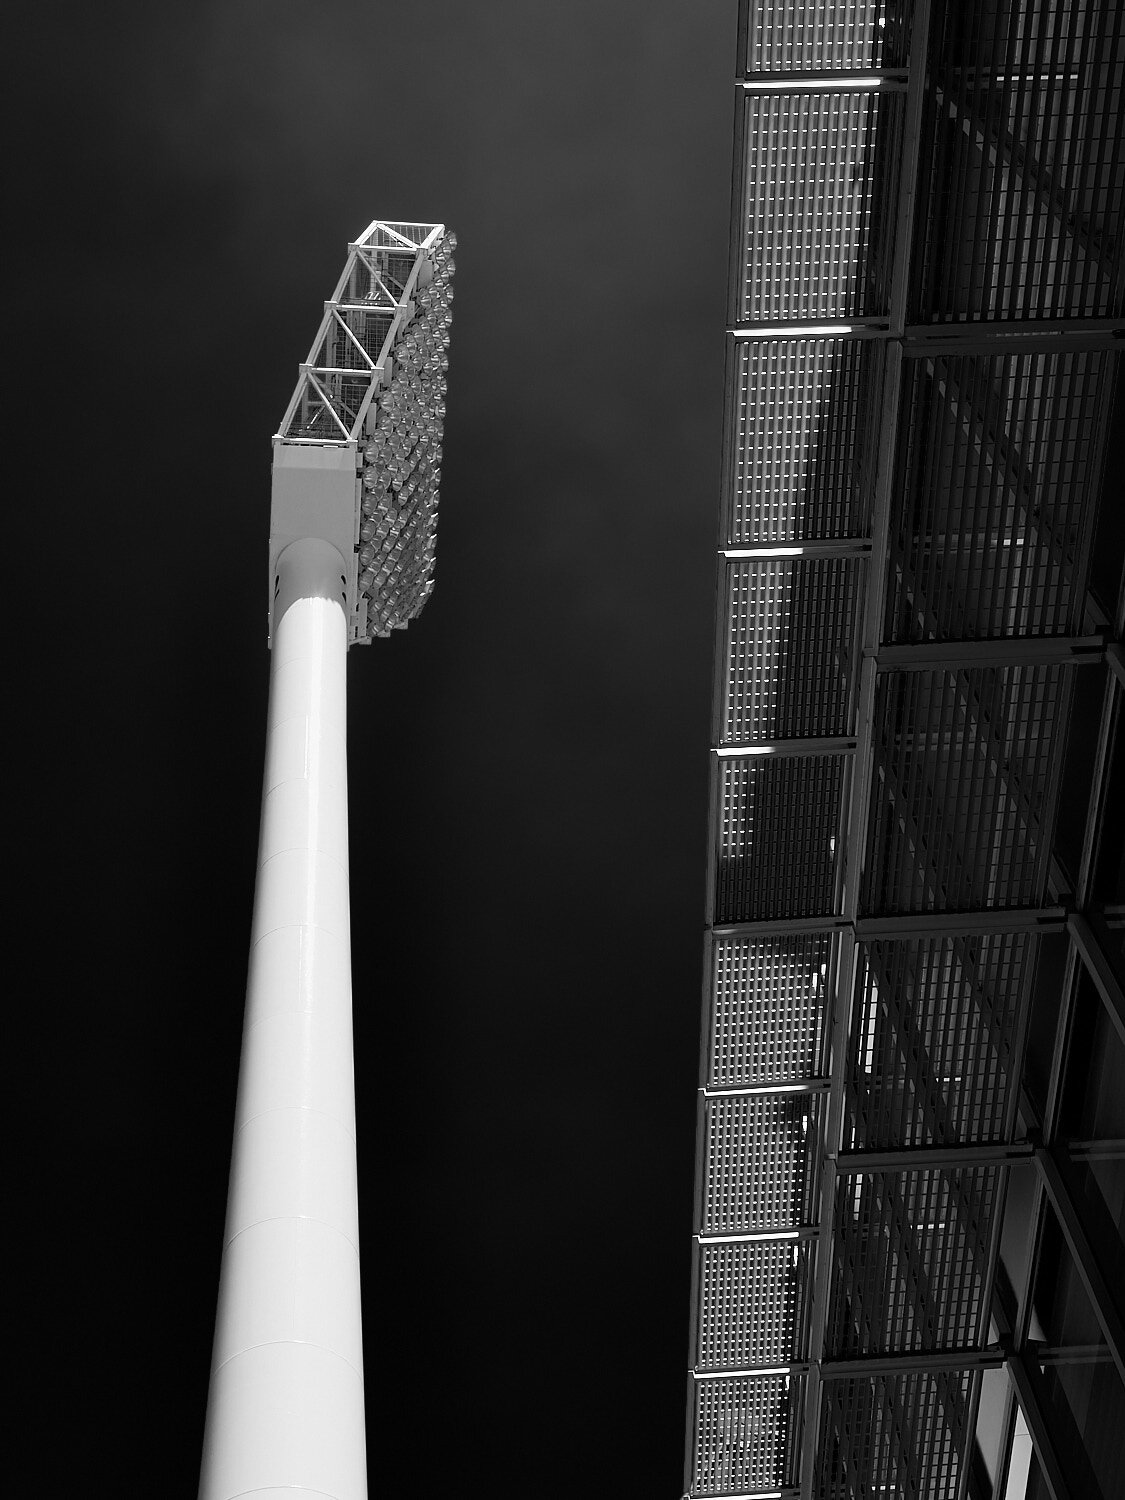 MCG Light Tower, Melbourne